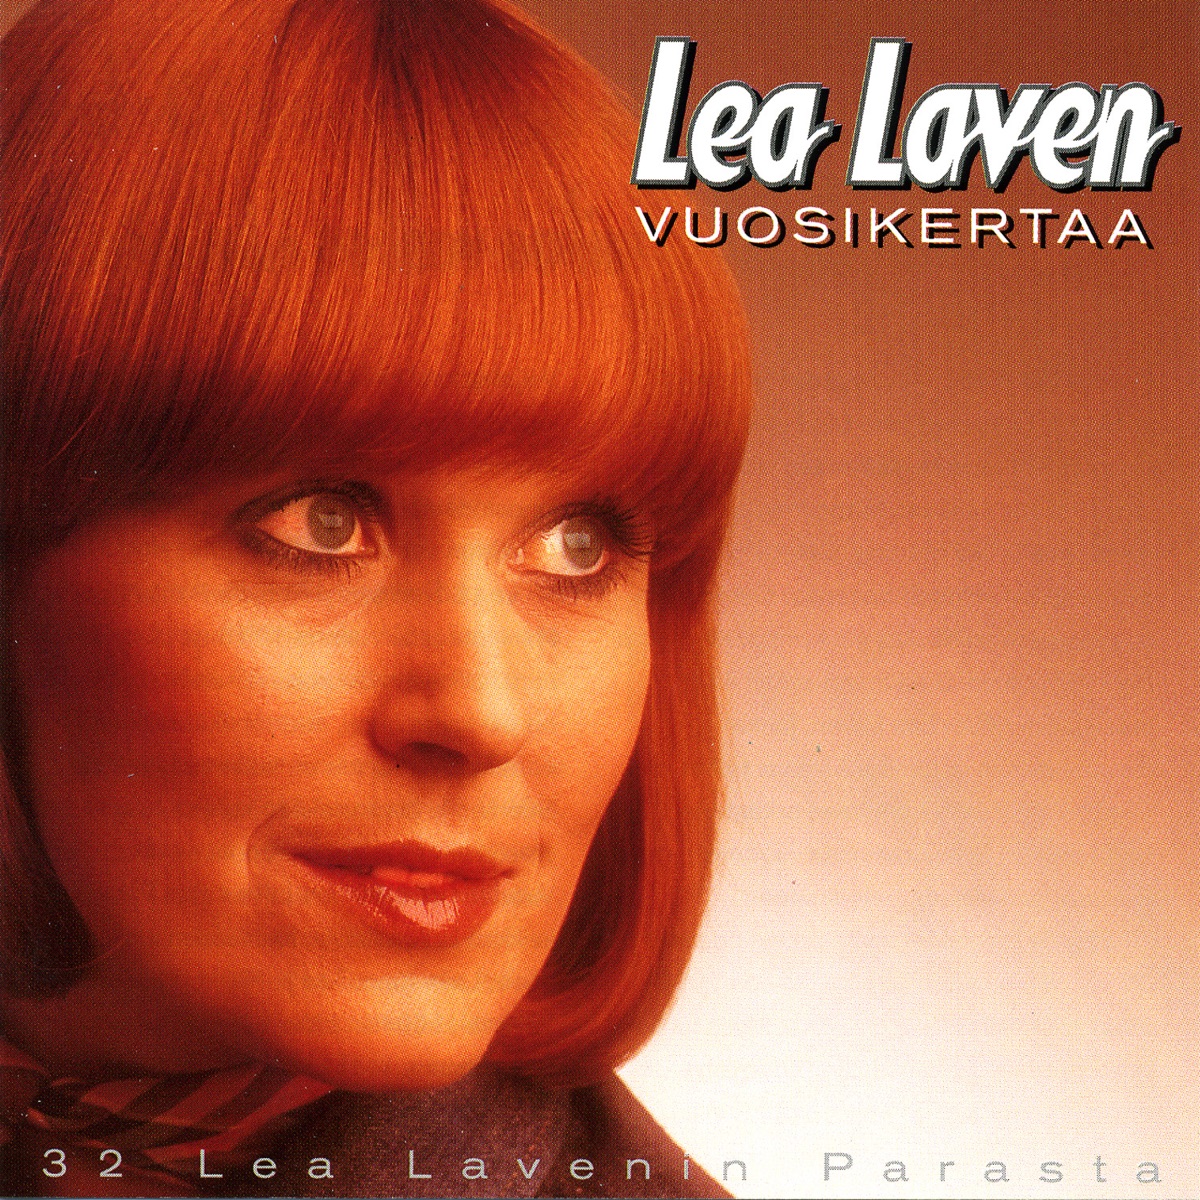 40 Unohtumatonta Laulua - Album by Lea Laven - Apple Music